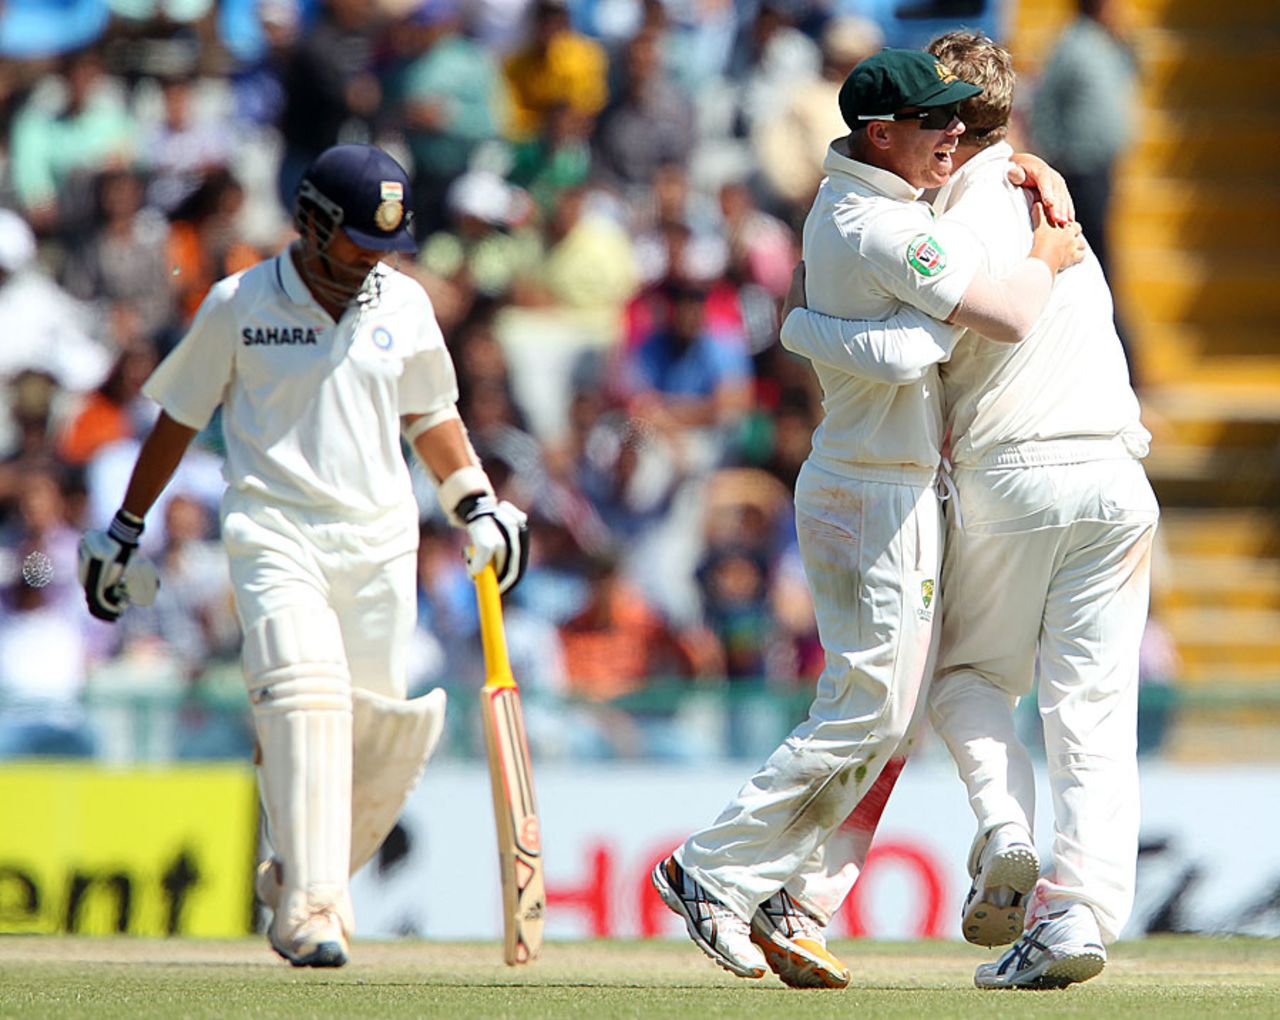 The Australians are ecstatic after dismissing Sachin Tendulkar, India v Australia, 3rd Test, Mohali, 4th day, March 17, 2013